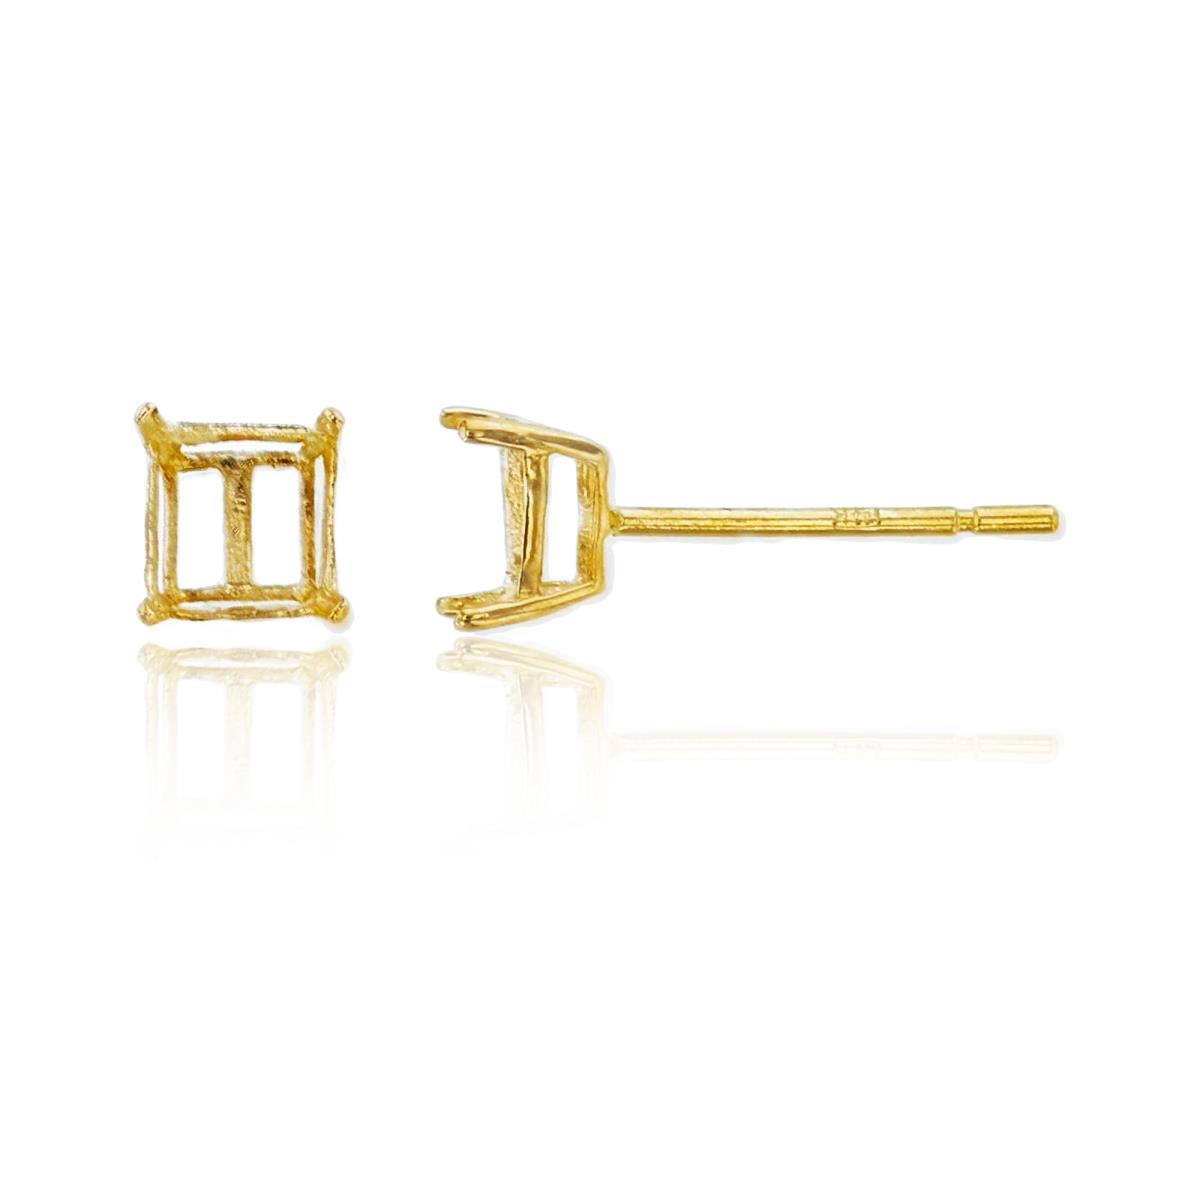 10K Yellow Gold 4mm Square Basket Stud Earrings-1PR. No stones.